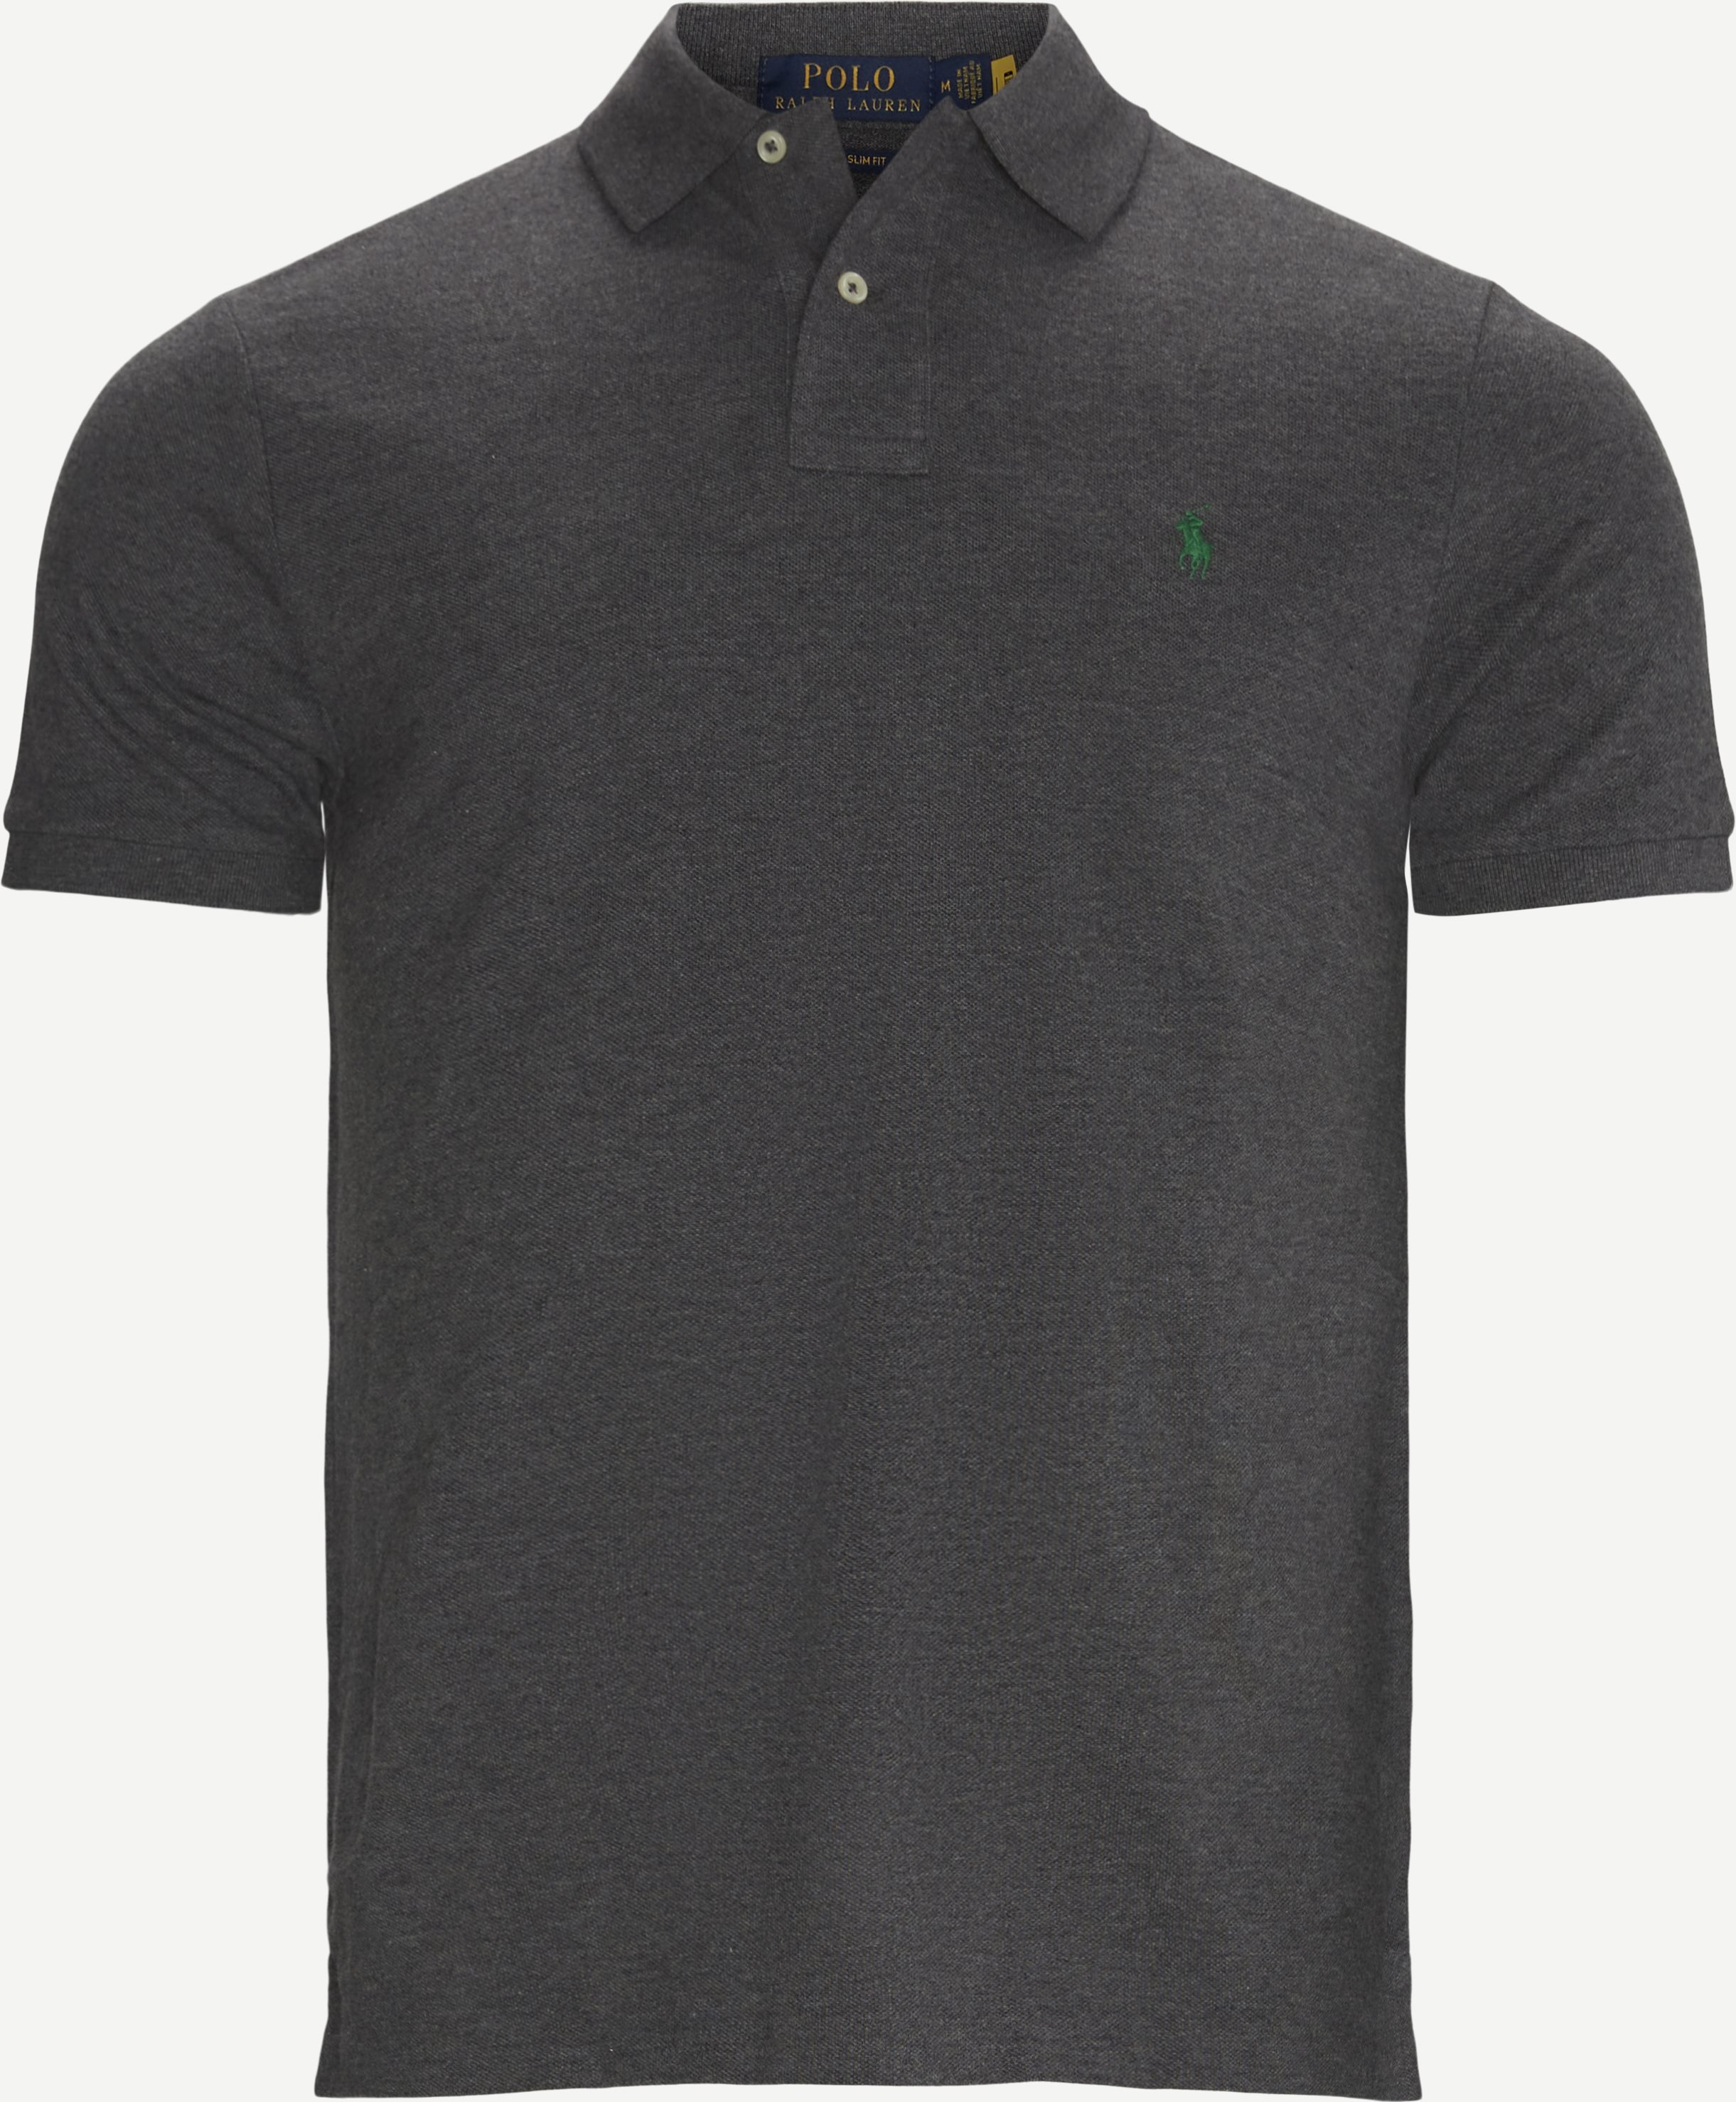 Polo T-shirt - T-shirts - Regular slim fit - Grå